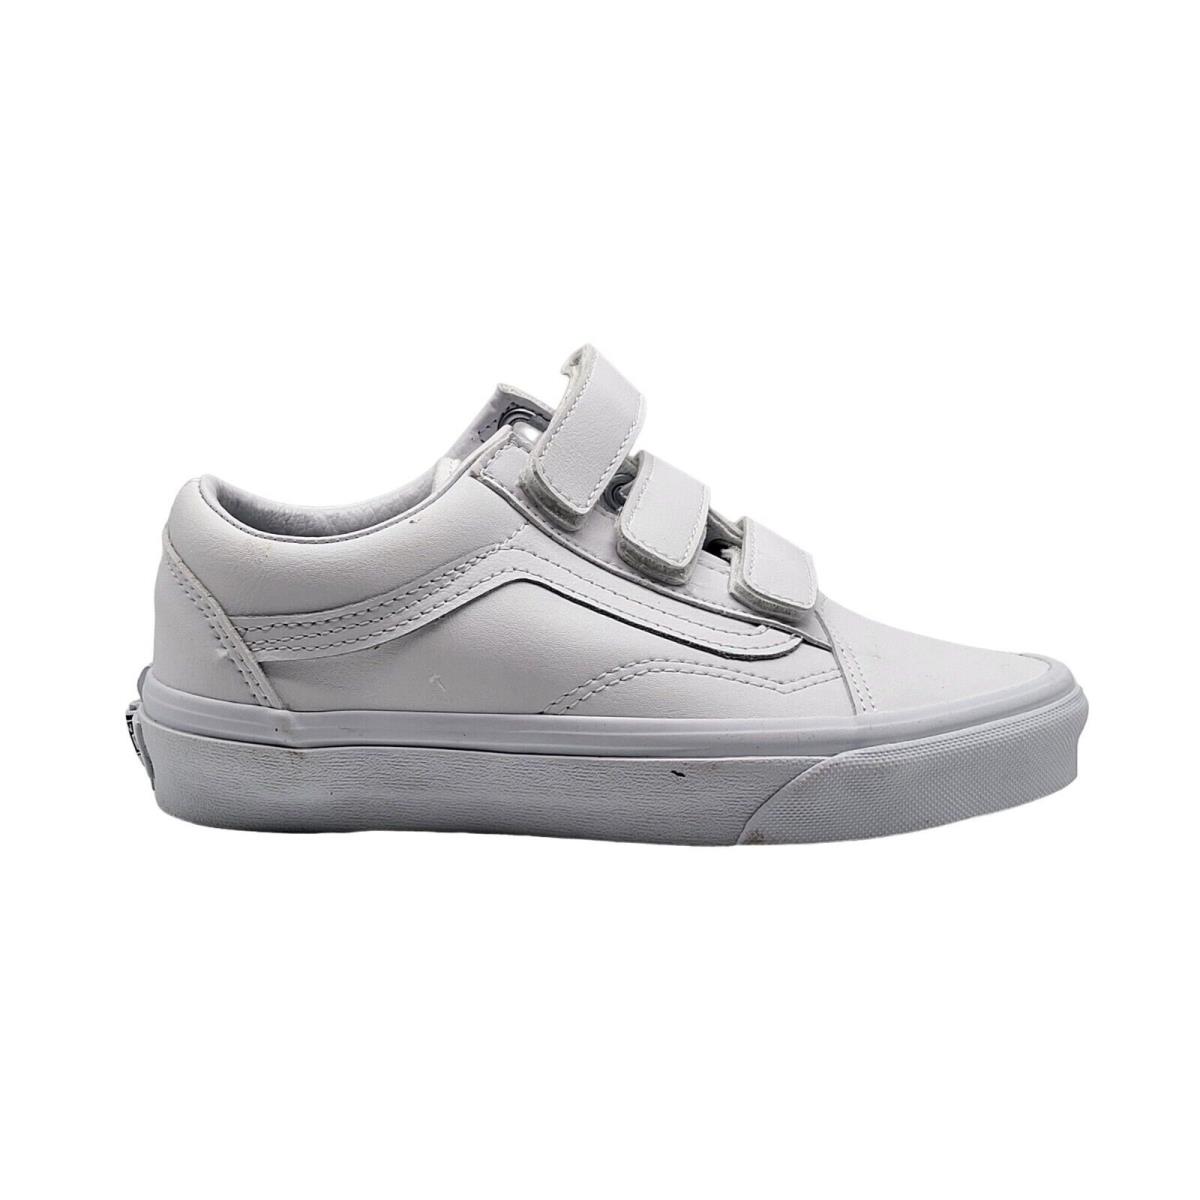 Vans Unisex Old Skool V White Skateboarding Low Top Leather Shoes Size 3.5 Men 5